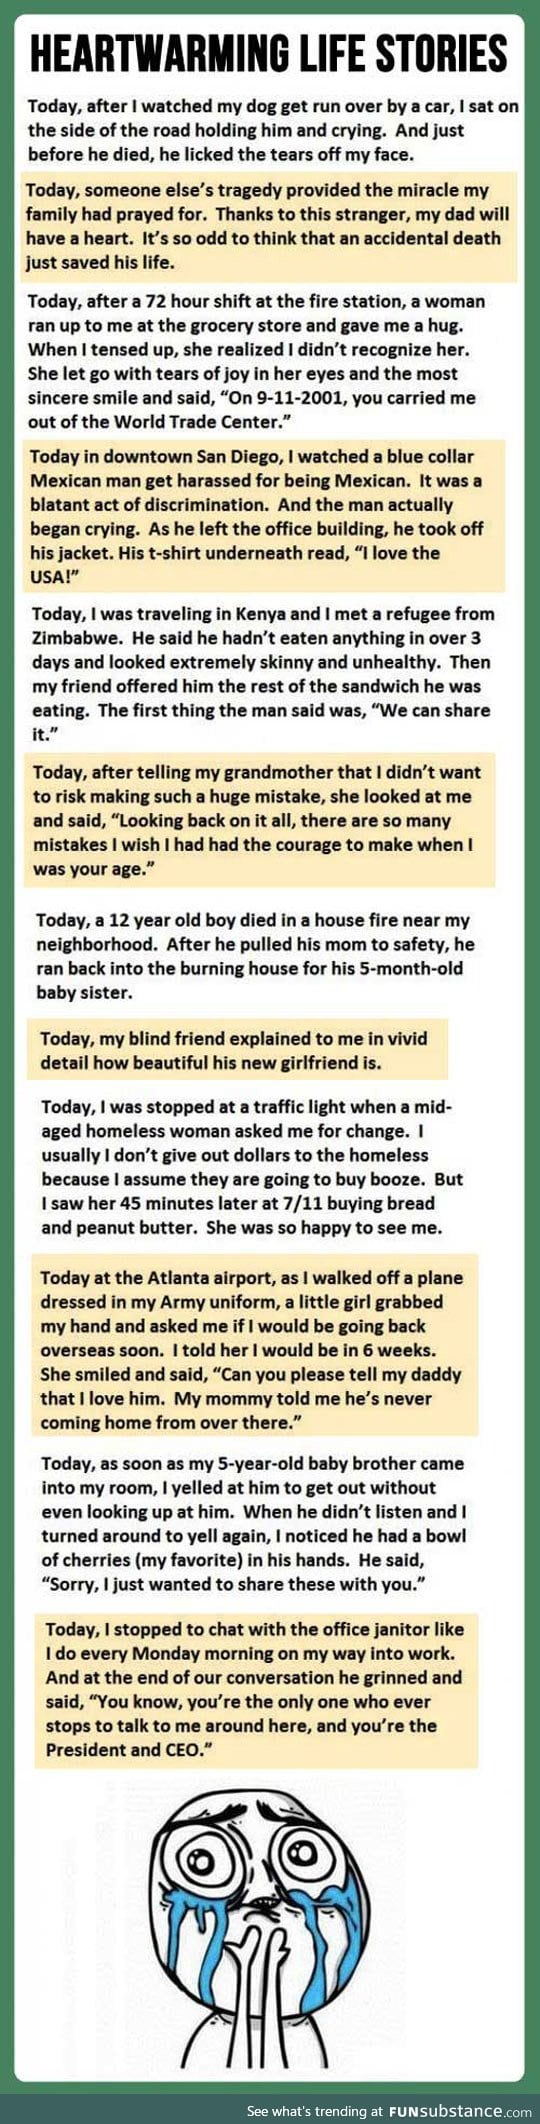 Heartwarming stories